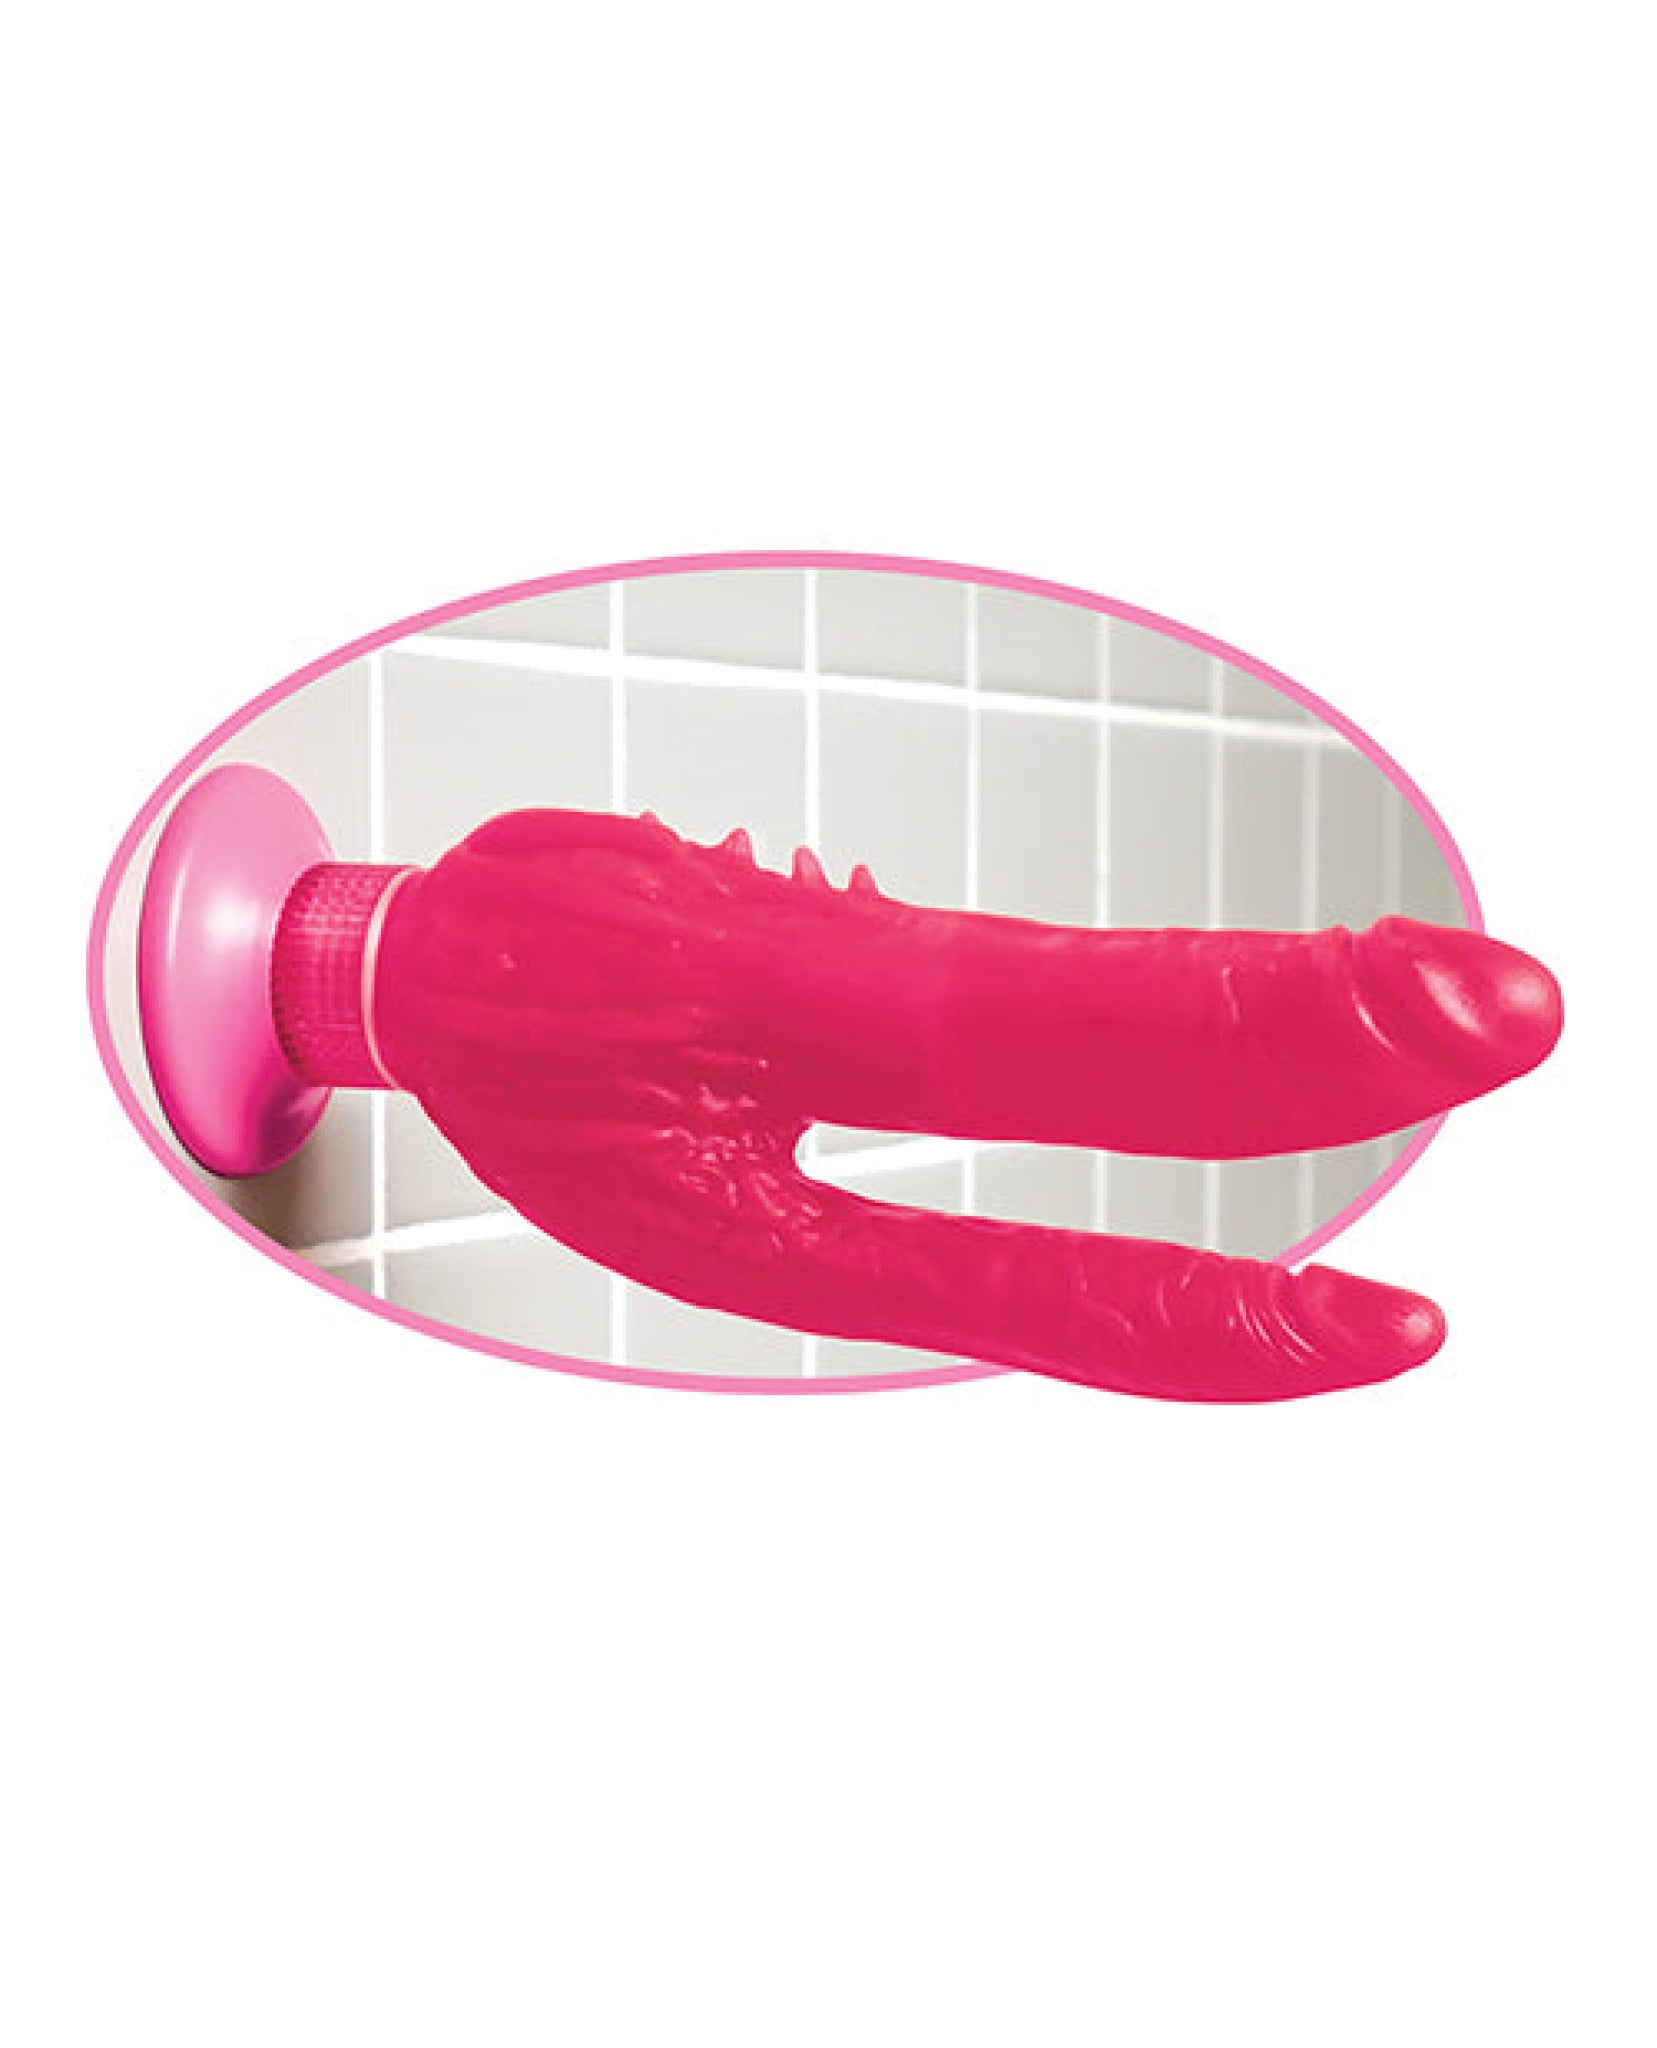 Wall Bangers Double Penetrator Waterproof - Pink Pipedream®